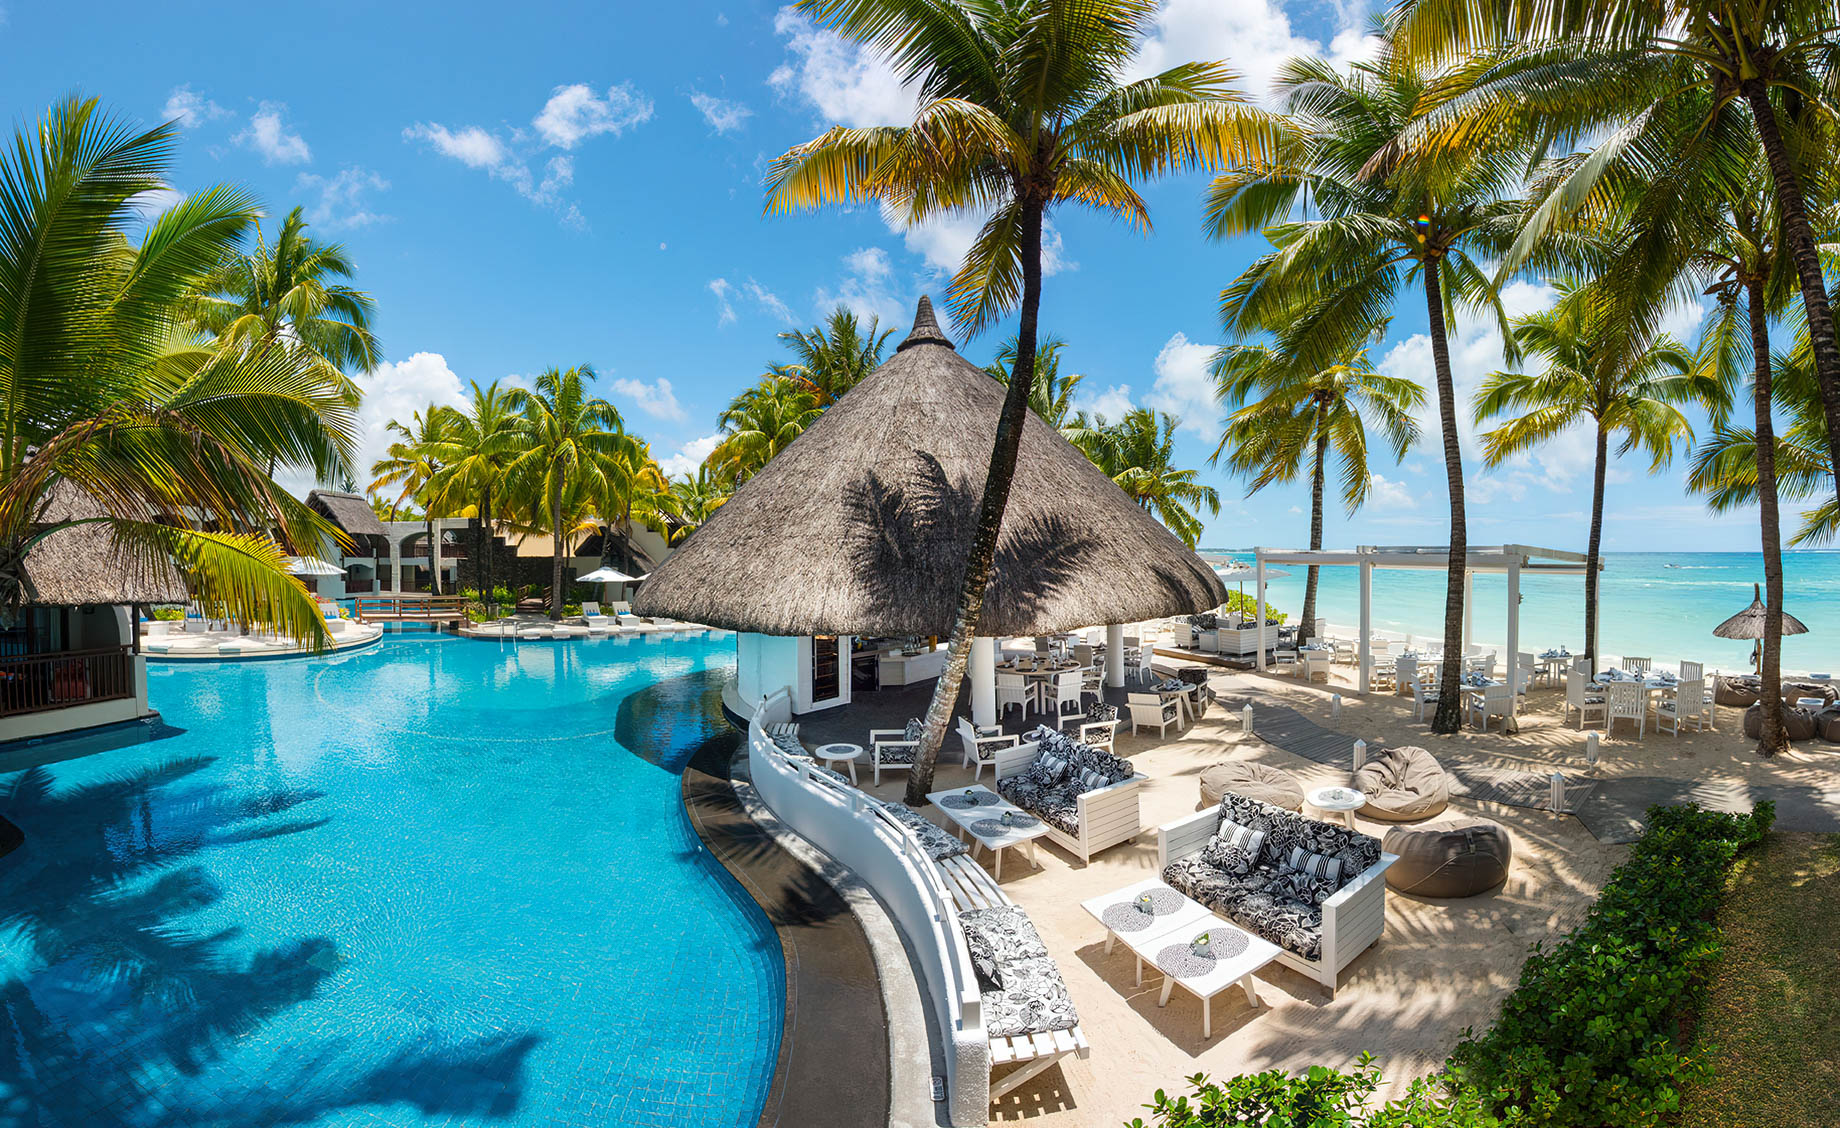 Constance Belle Mare Plage Resort – Mauritius – Lakaze Restaurant Ocean View